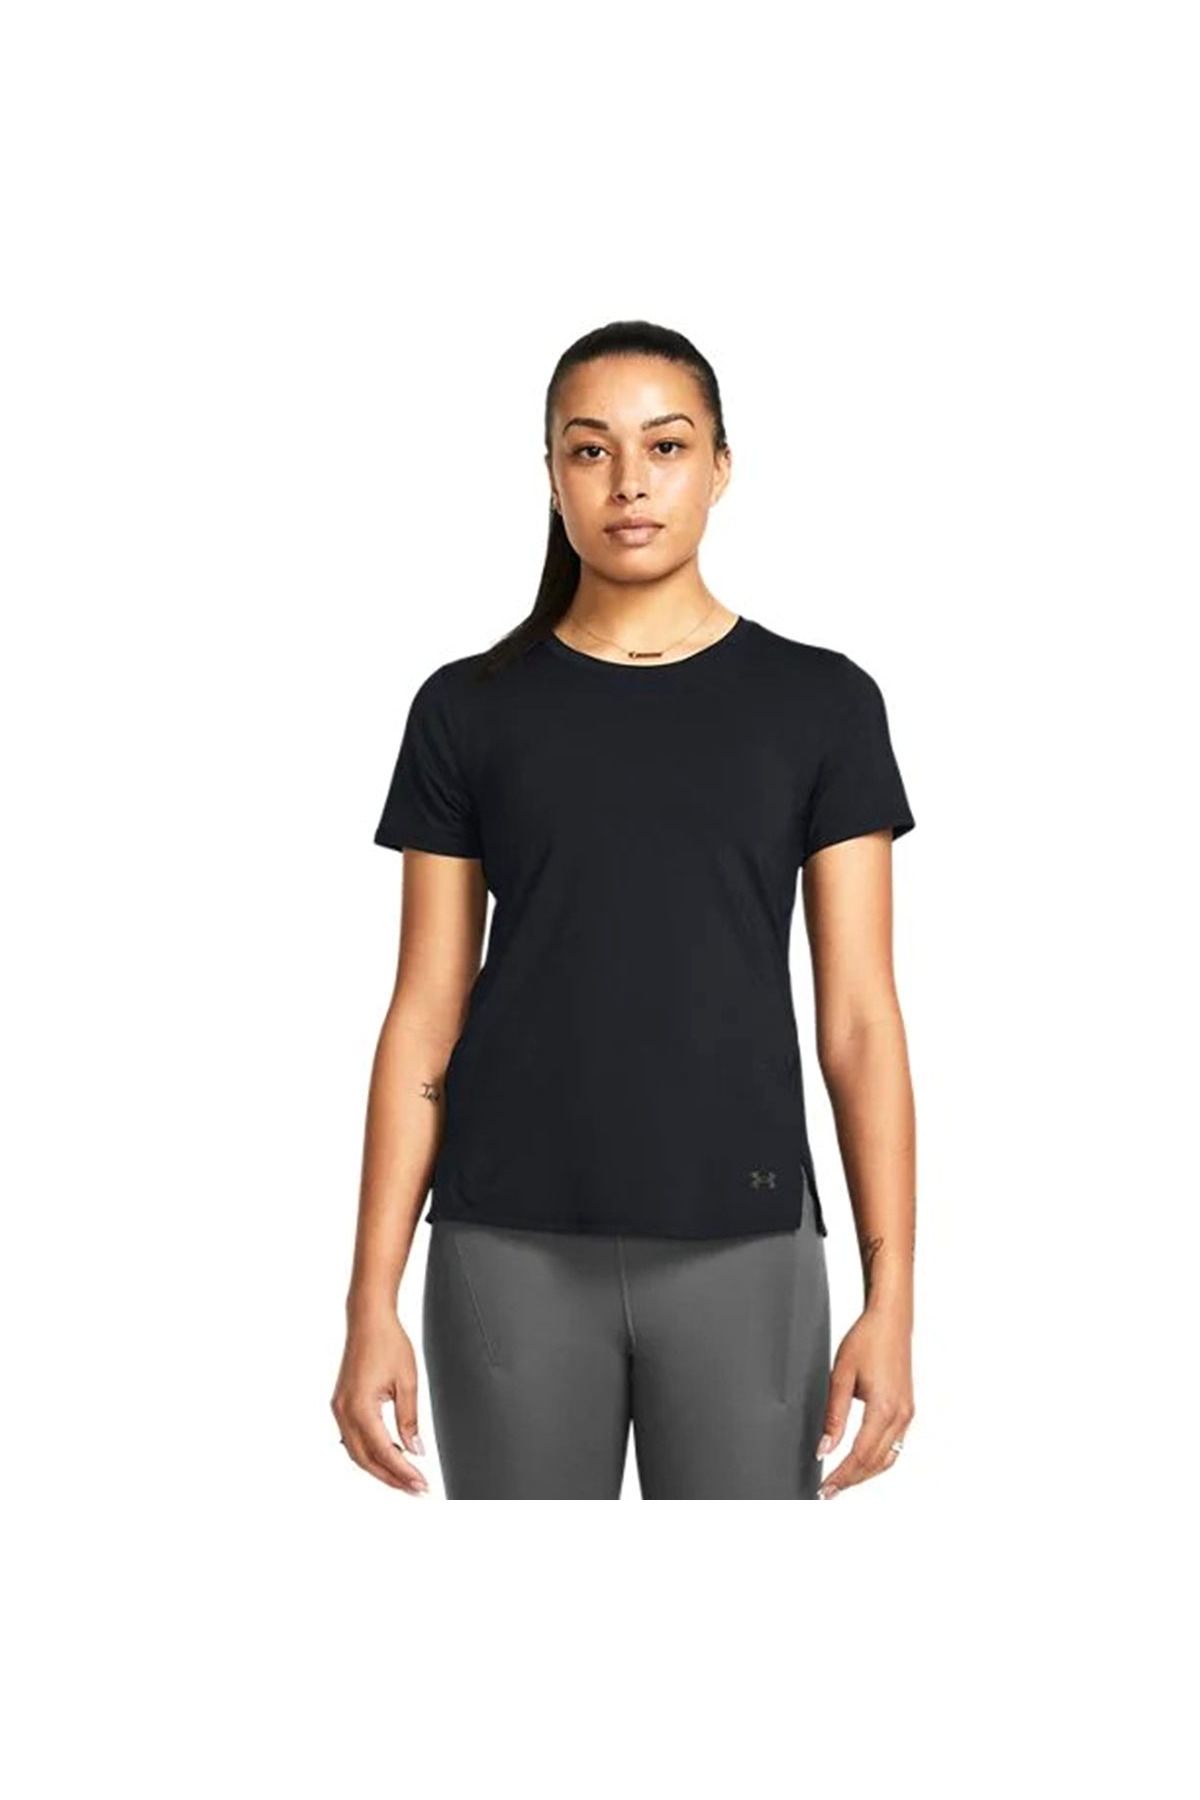 Under Armour Launch Elite Kadın Siyah Koşu T-Shirt 1383364-001